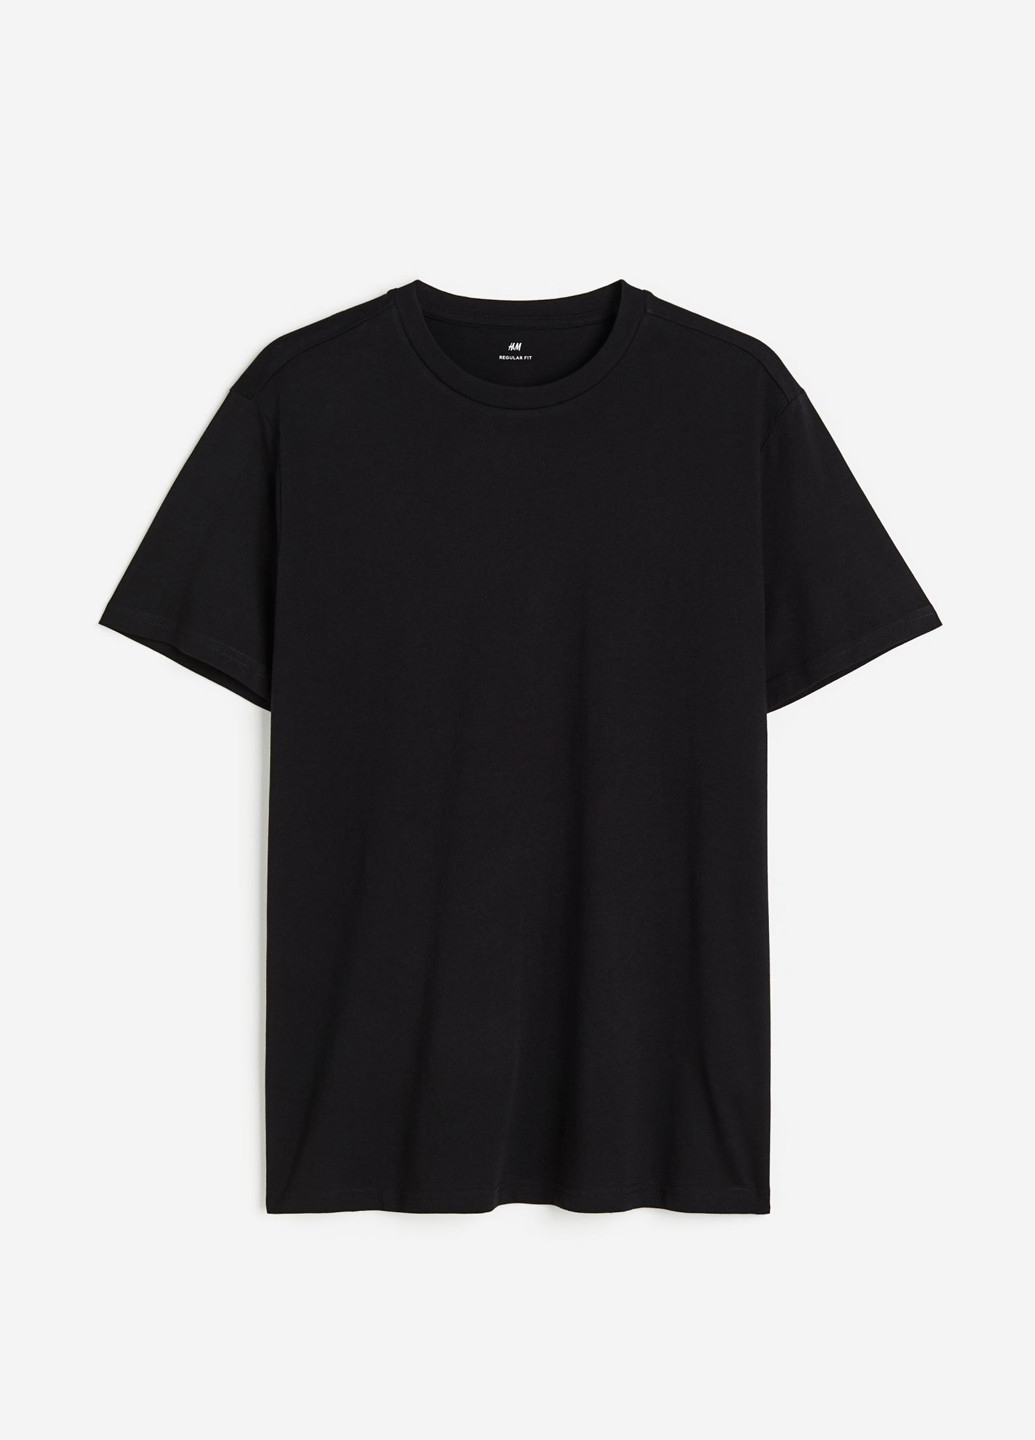 Черная футболка (3 шт.) H&M